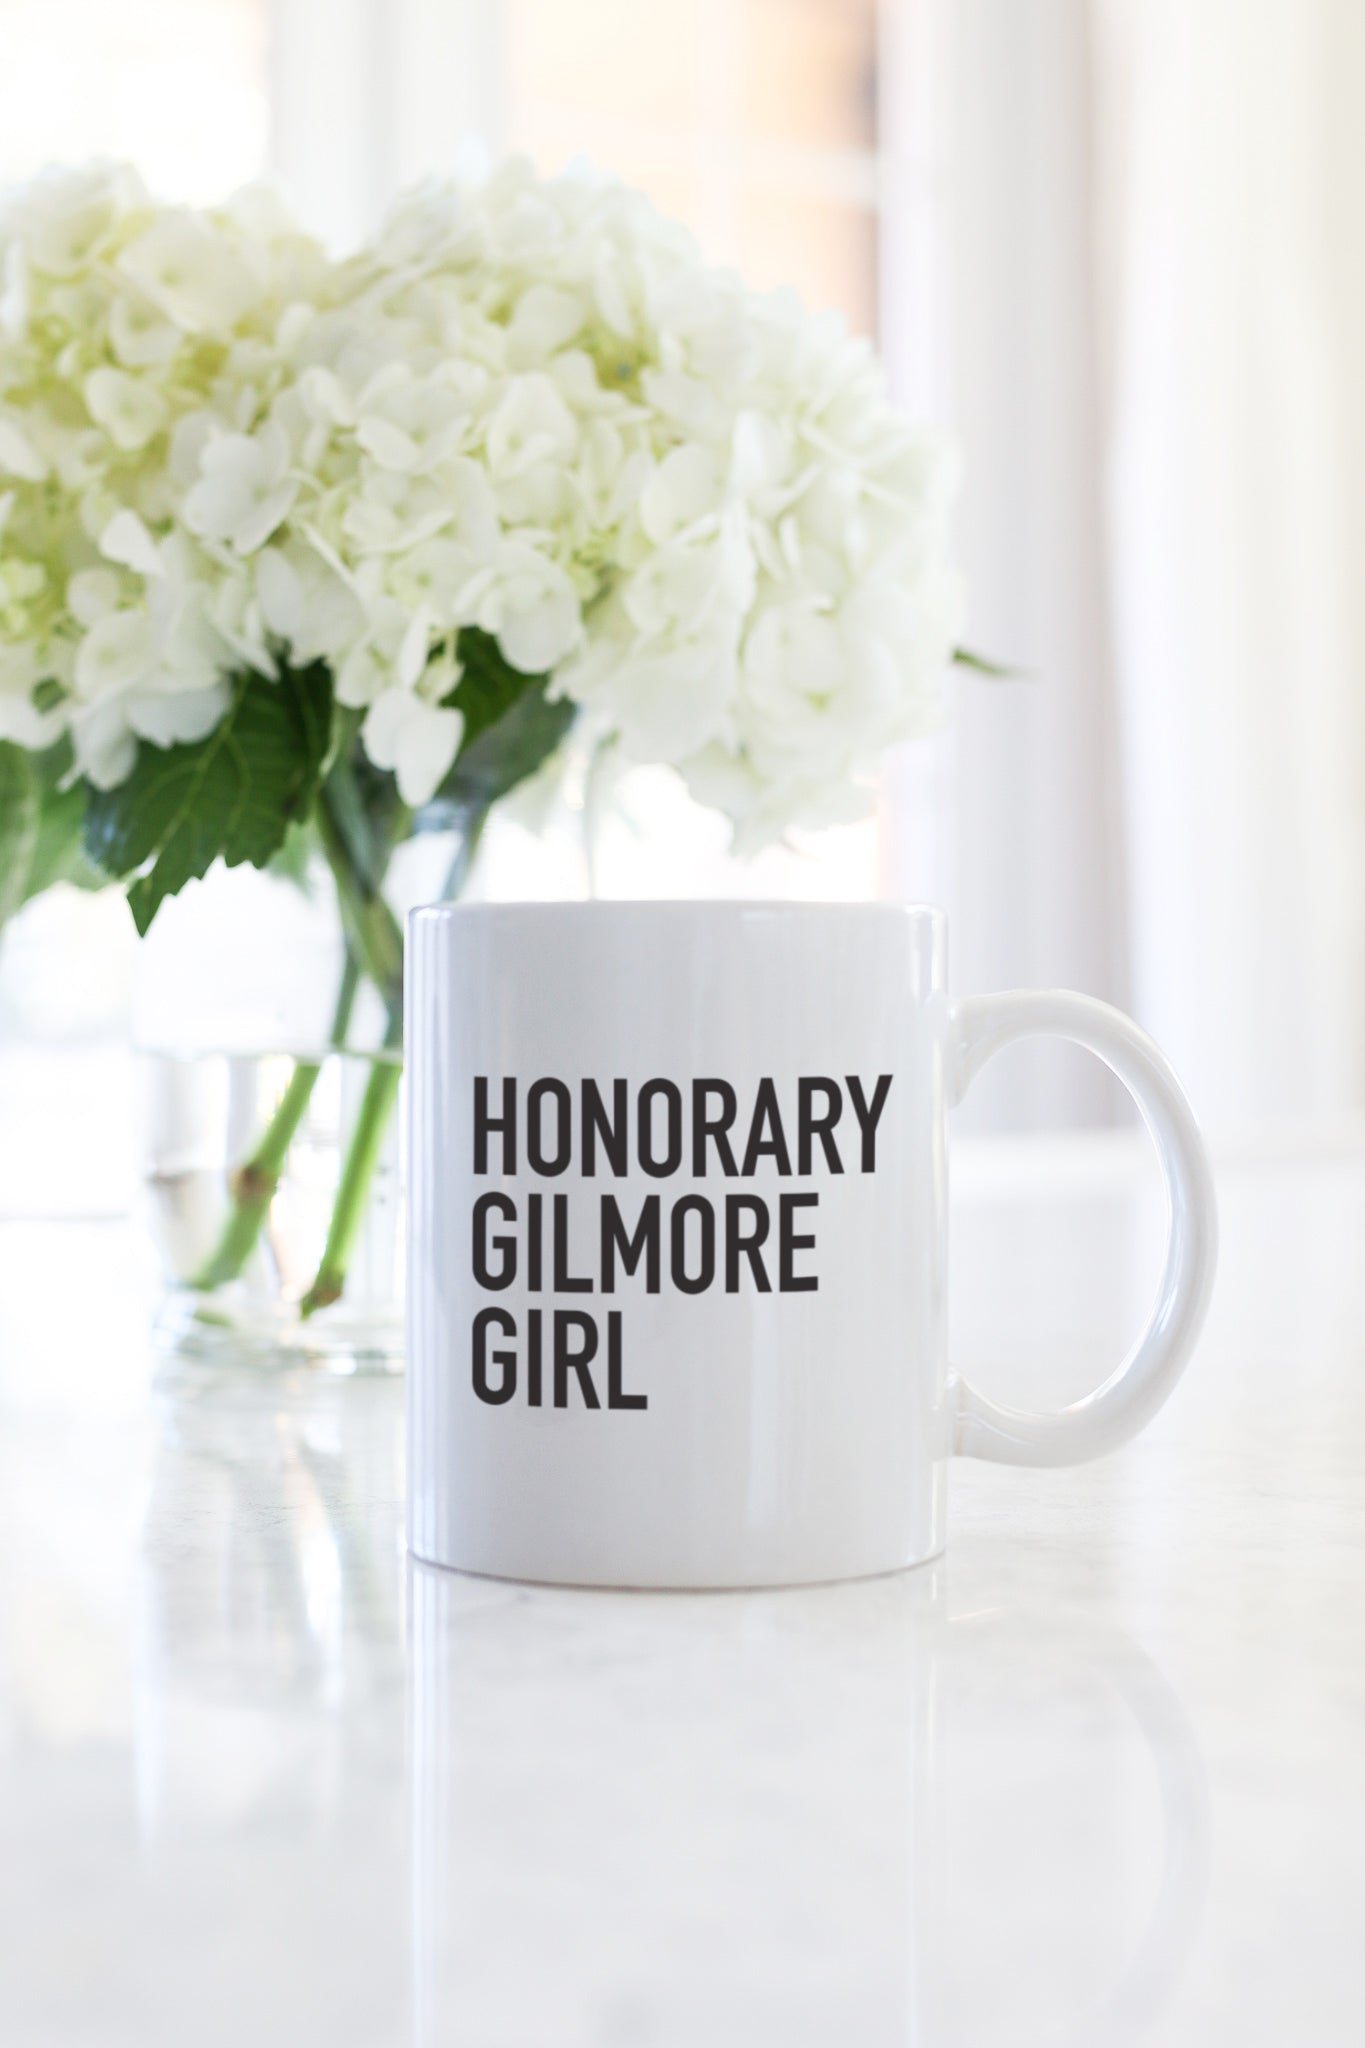 honorary gilmore girl mug kelly elizabeth designs